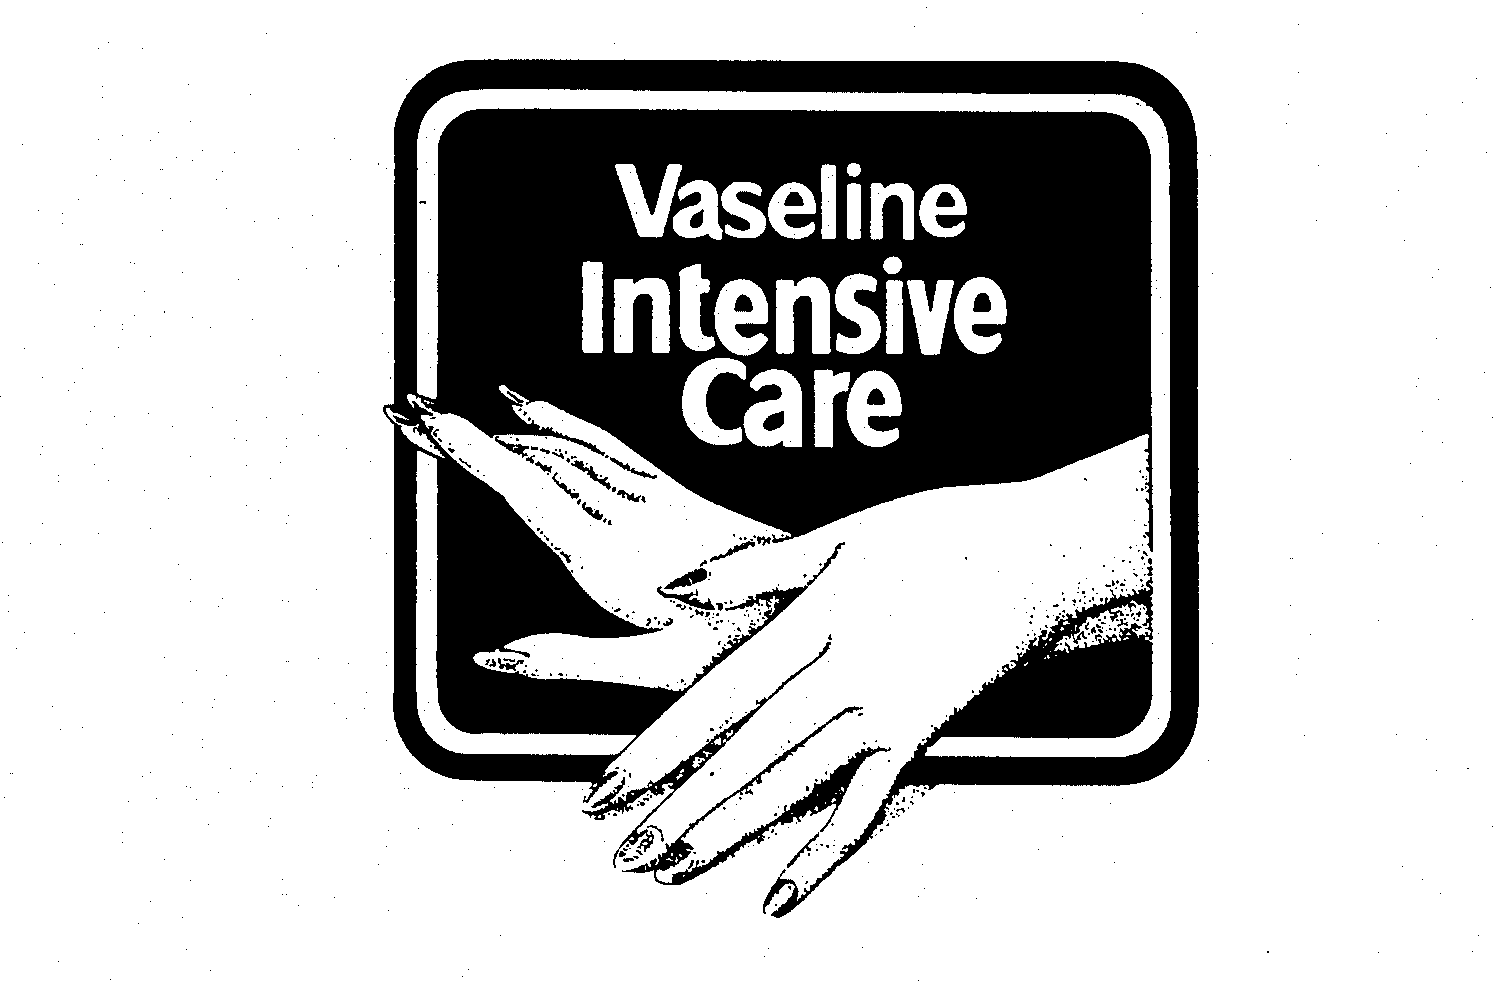 VASELINE INTENSIVE CARE